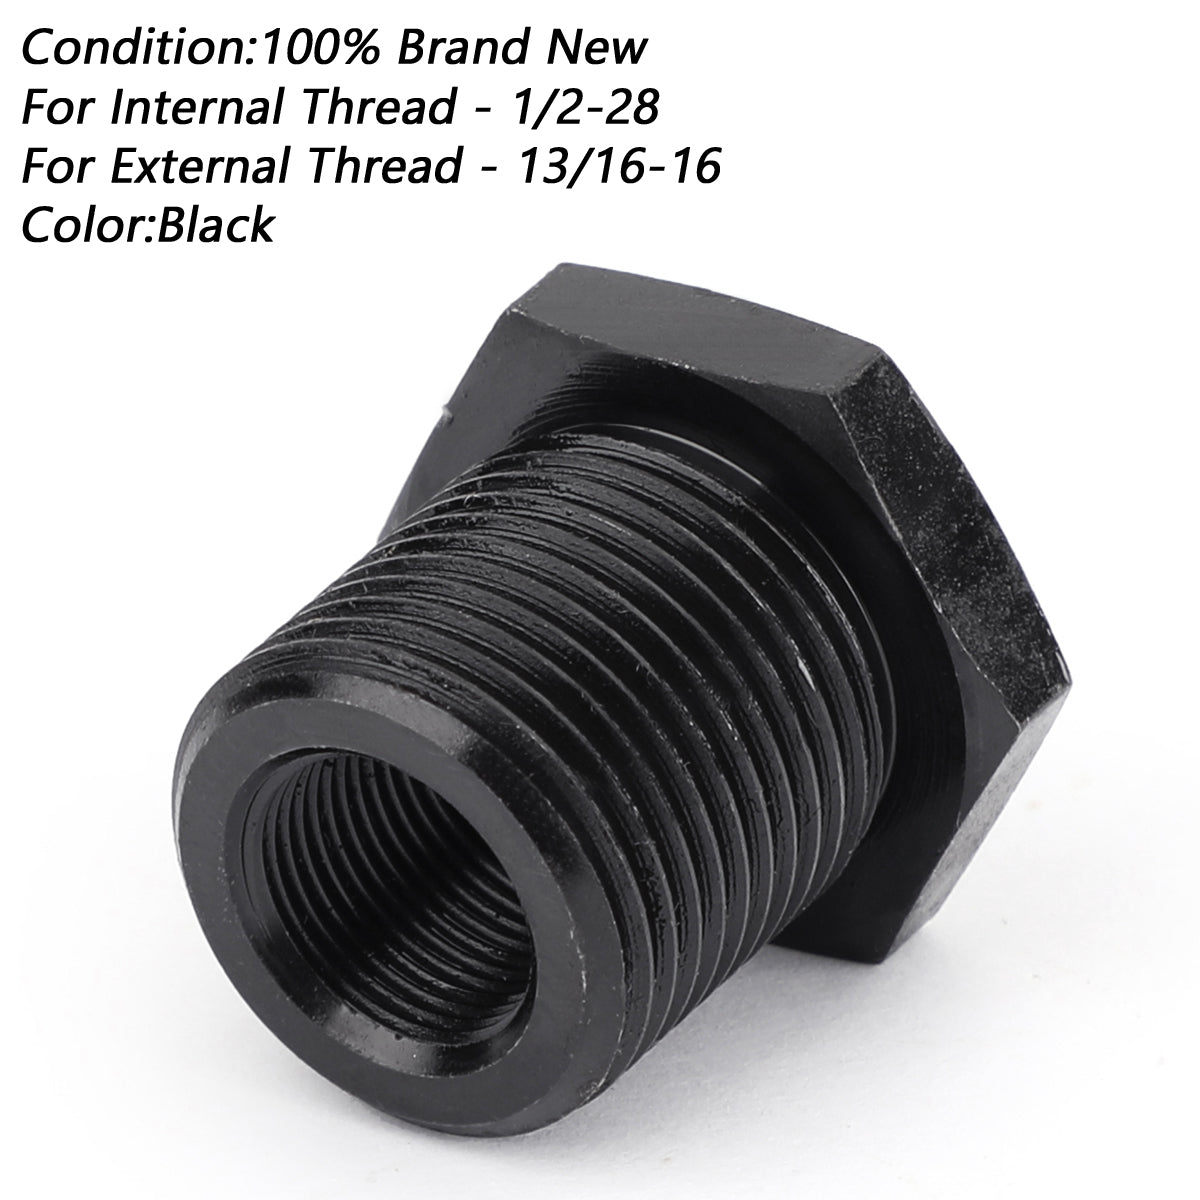 3PCS 1/2-28 to 3/4-16, 13/16-16, 3/4 NPT Thread Oil Filter Adapters Black New